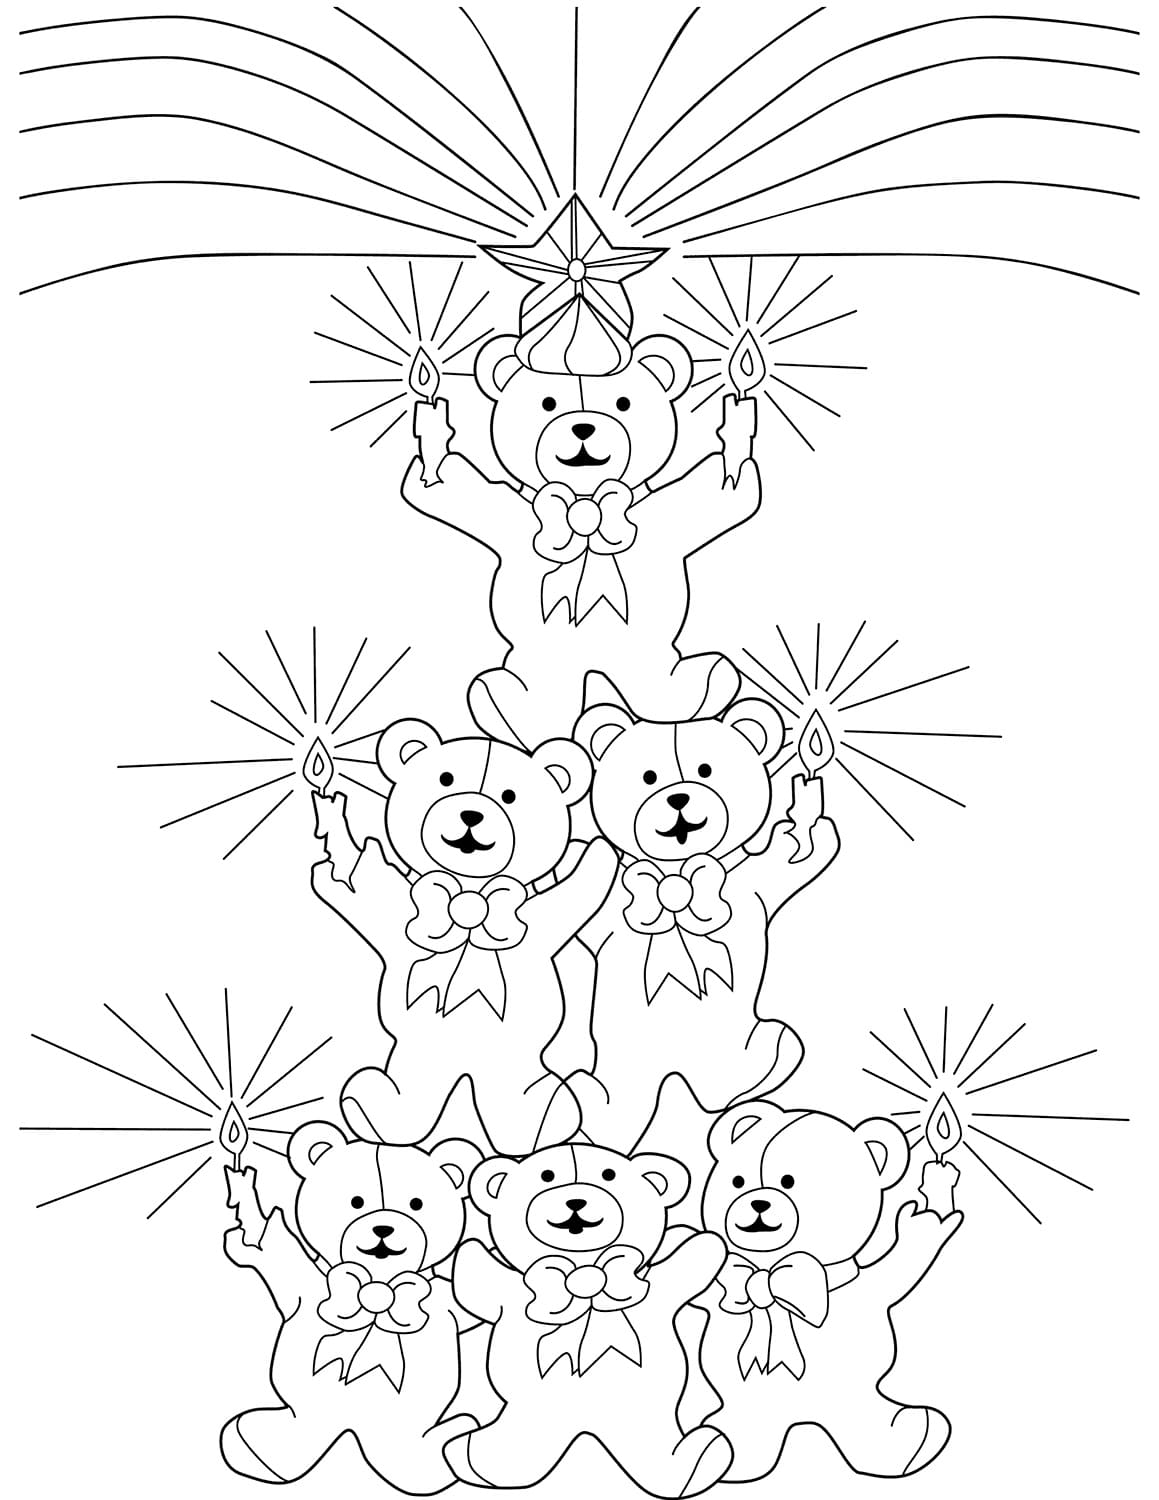 Christmas Tree Teddy Bears